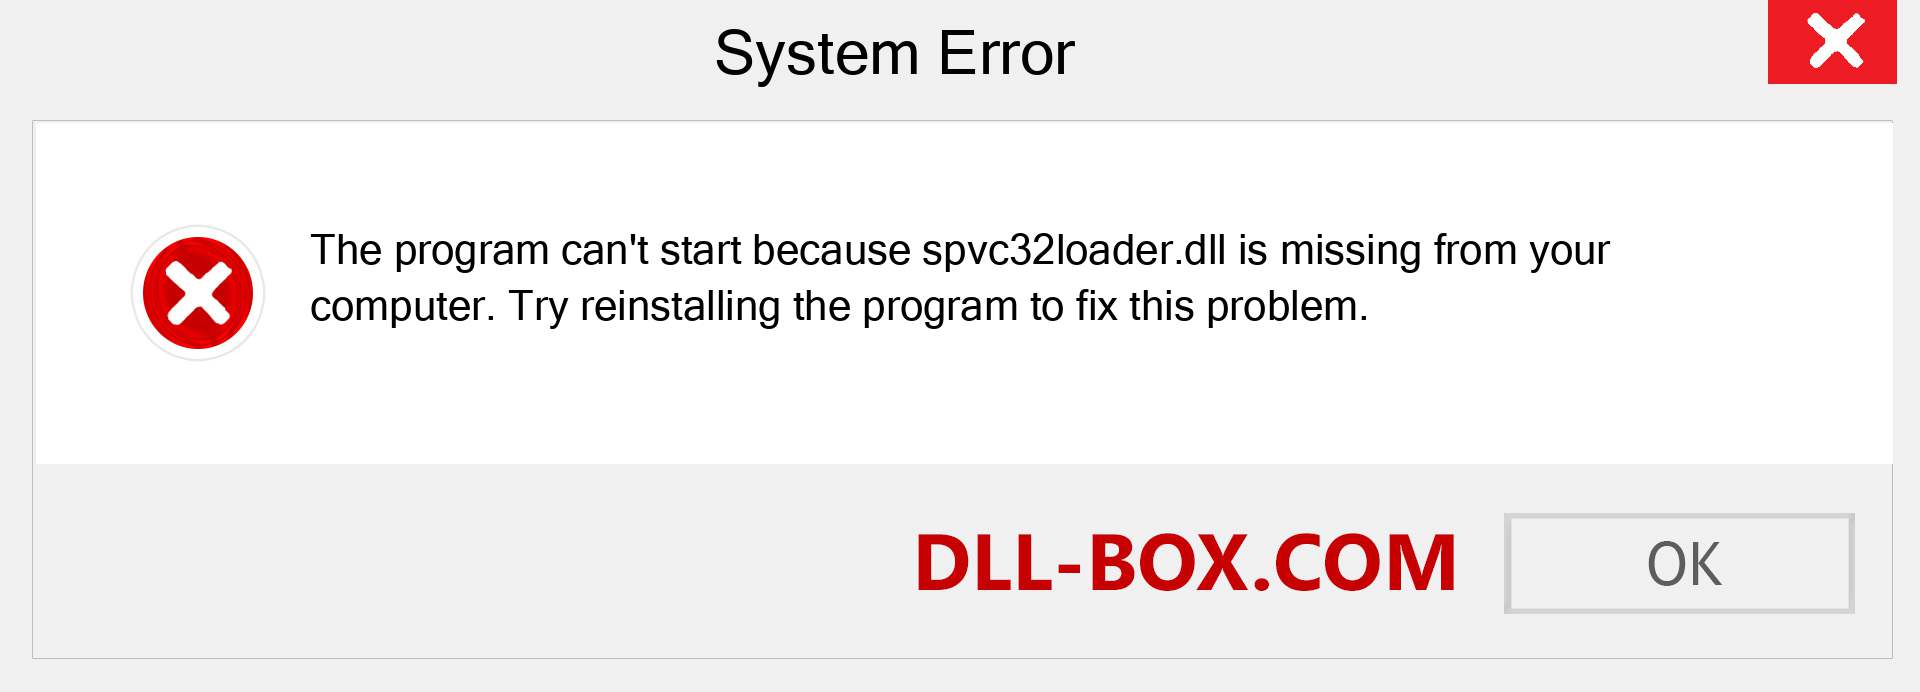  spvc32loader.dll file is missing?. Download for Windows 7, 8, 10 - Fix  spvc32loader dll Missing Error on Windows, photos, images